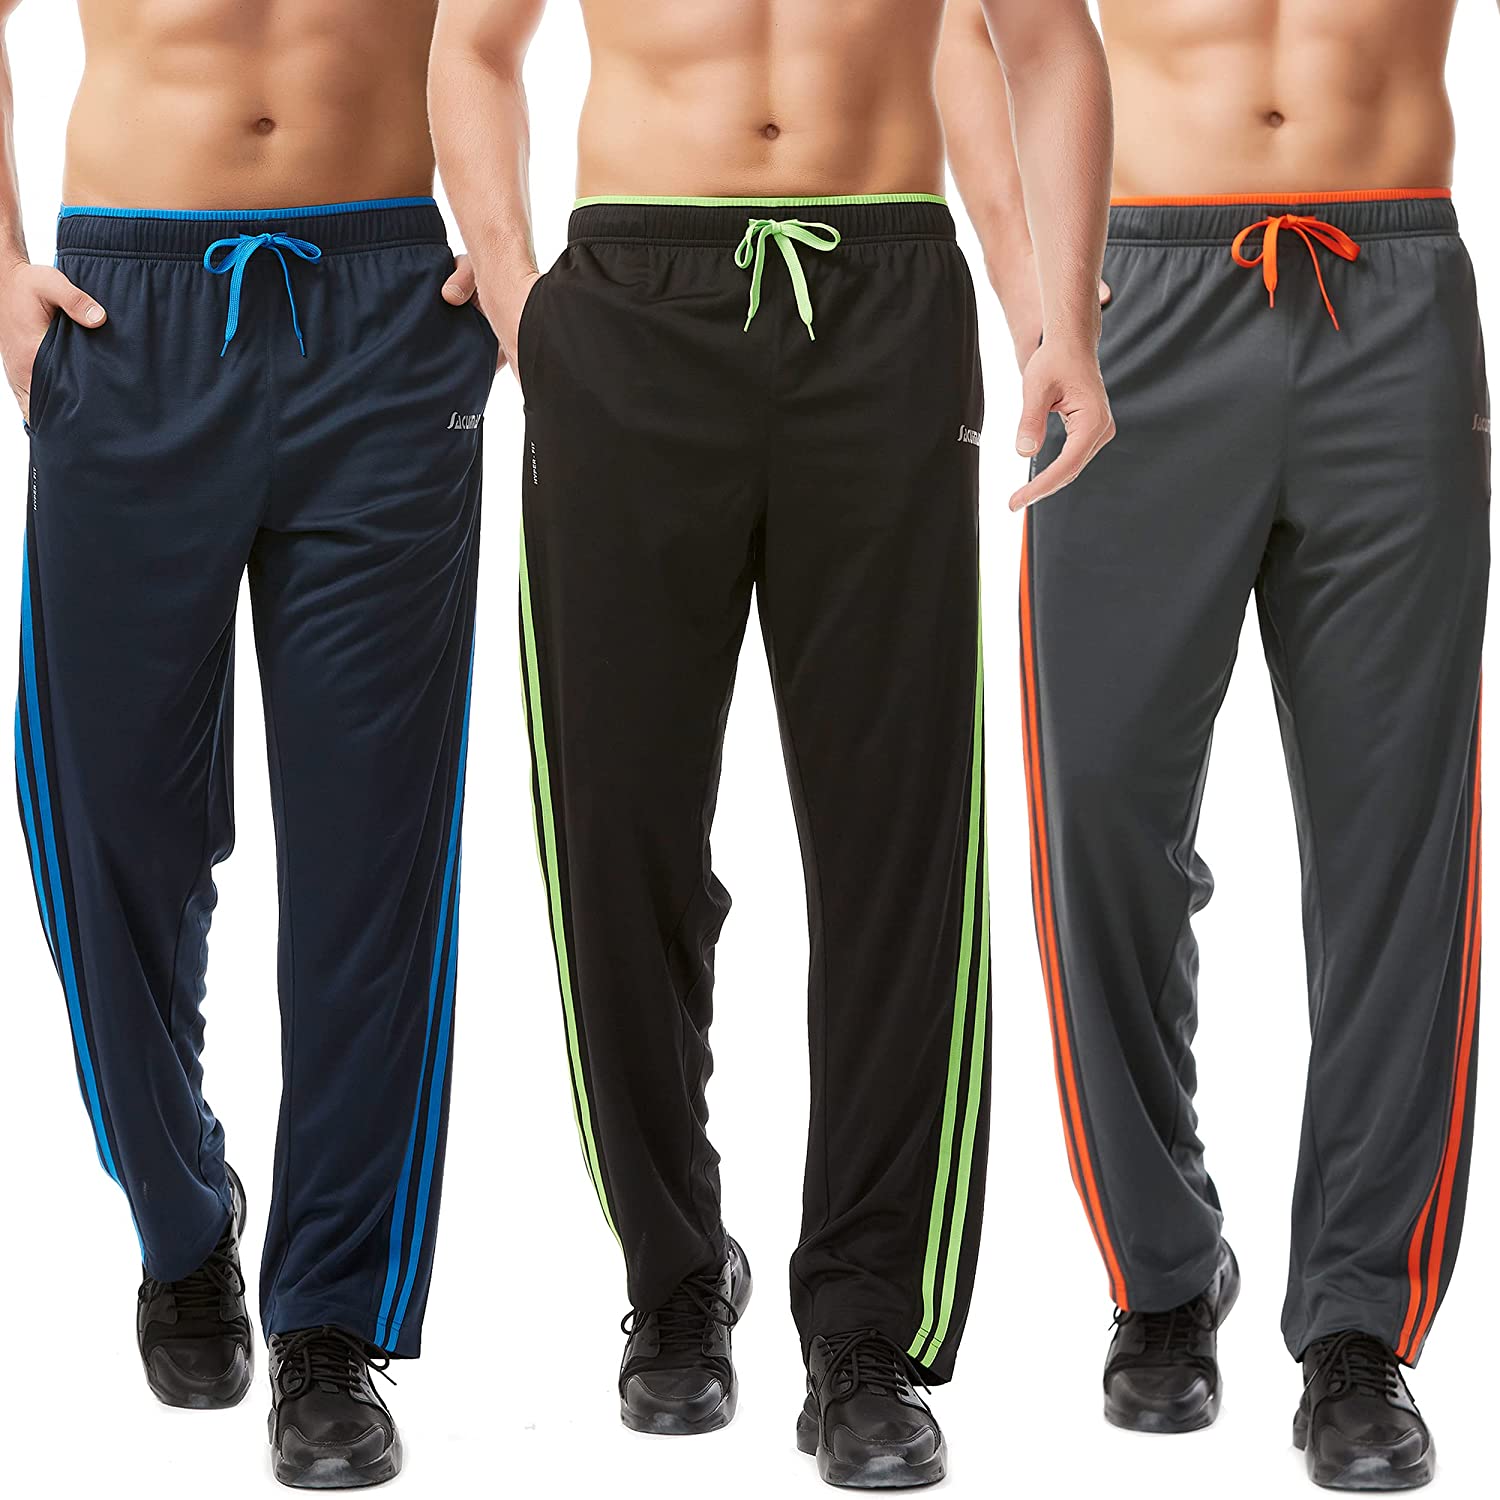 Rdruko Men's Quick Dry Sweatpants Open Bottom Yoga Running Athletic Pants with Pockets 